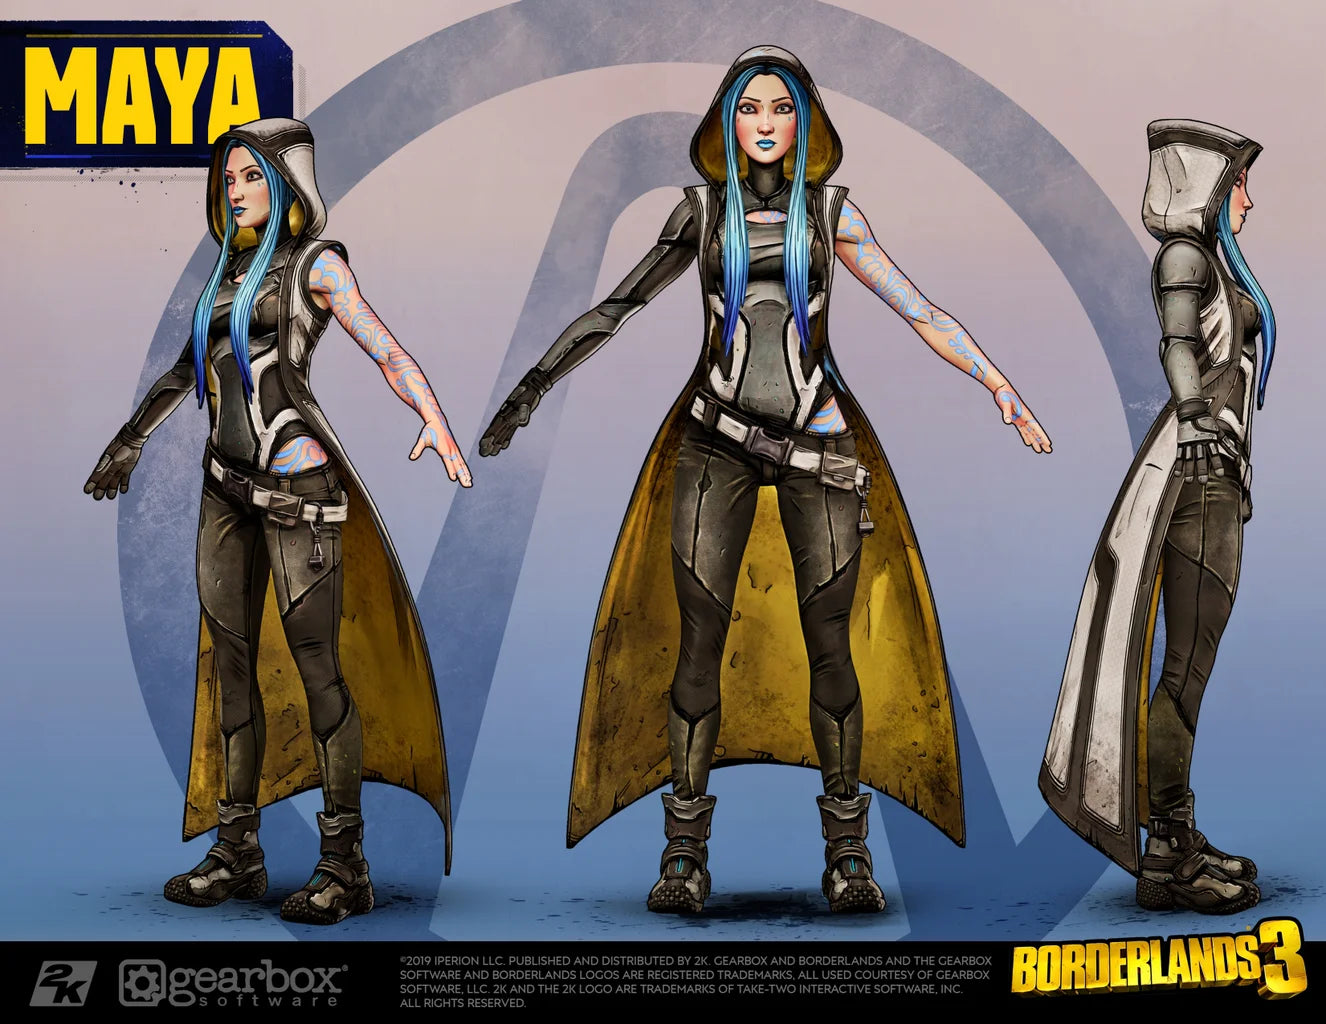 Maya from Borderlands 3 costume cosplay